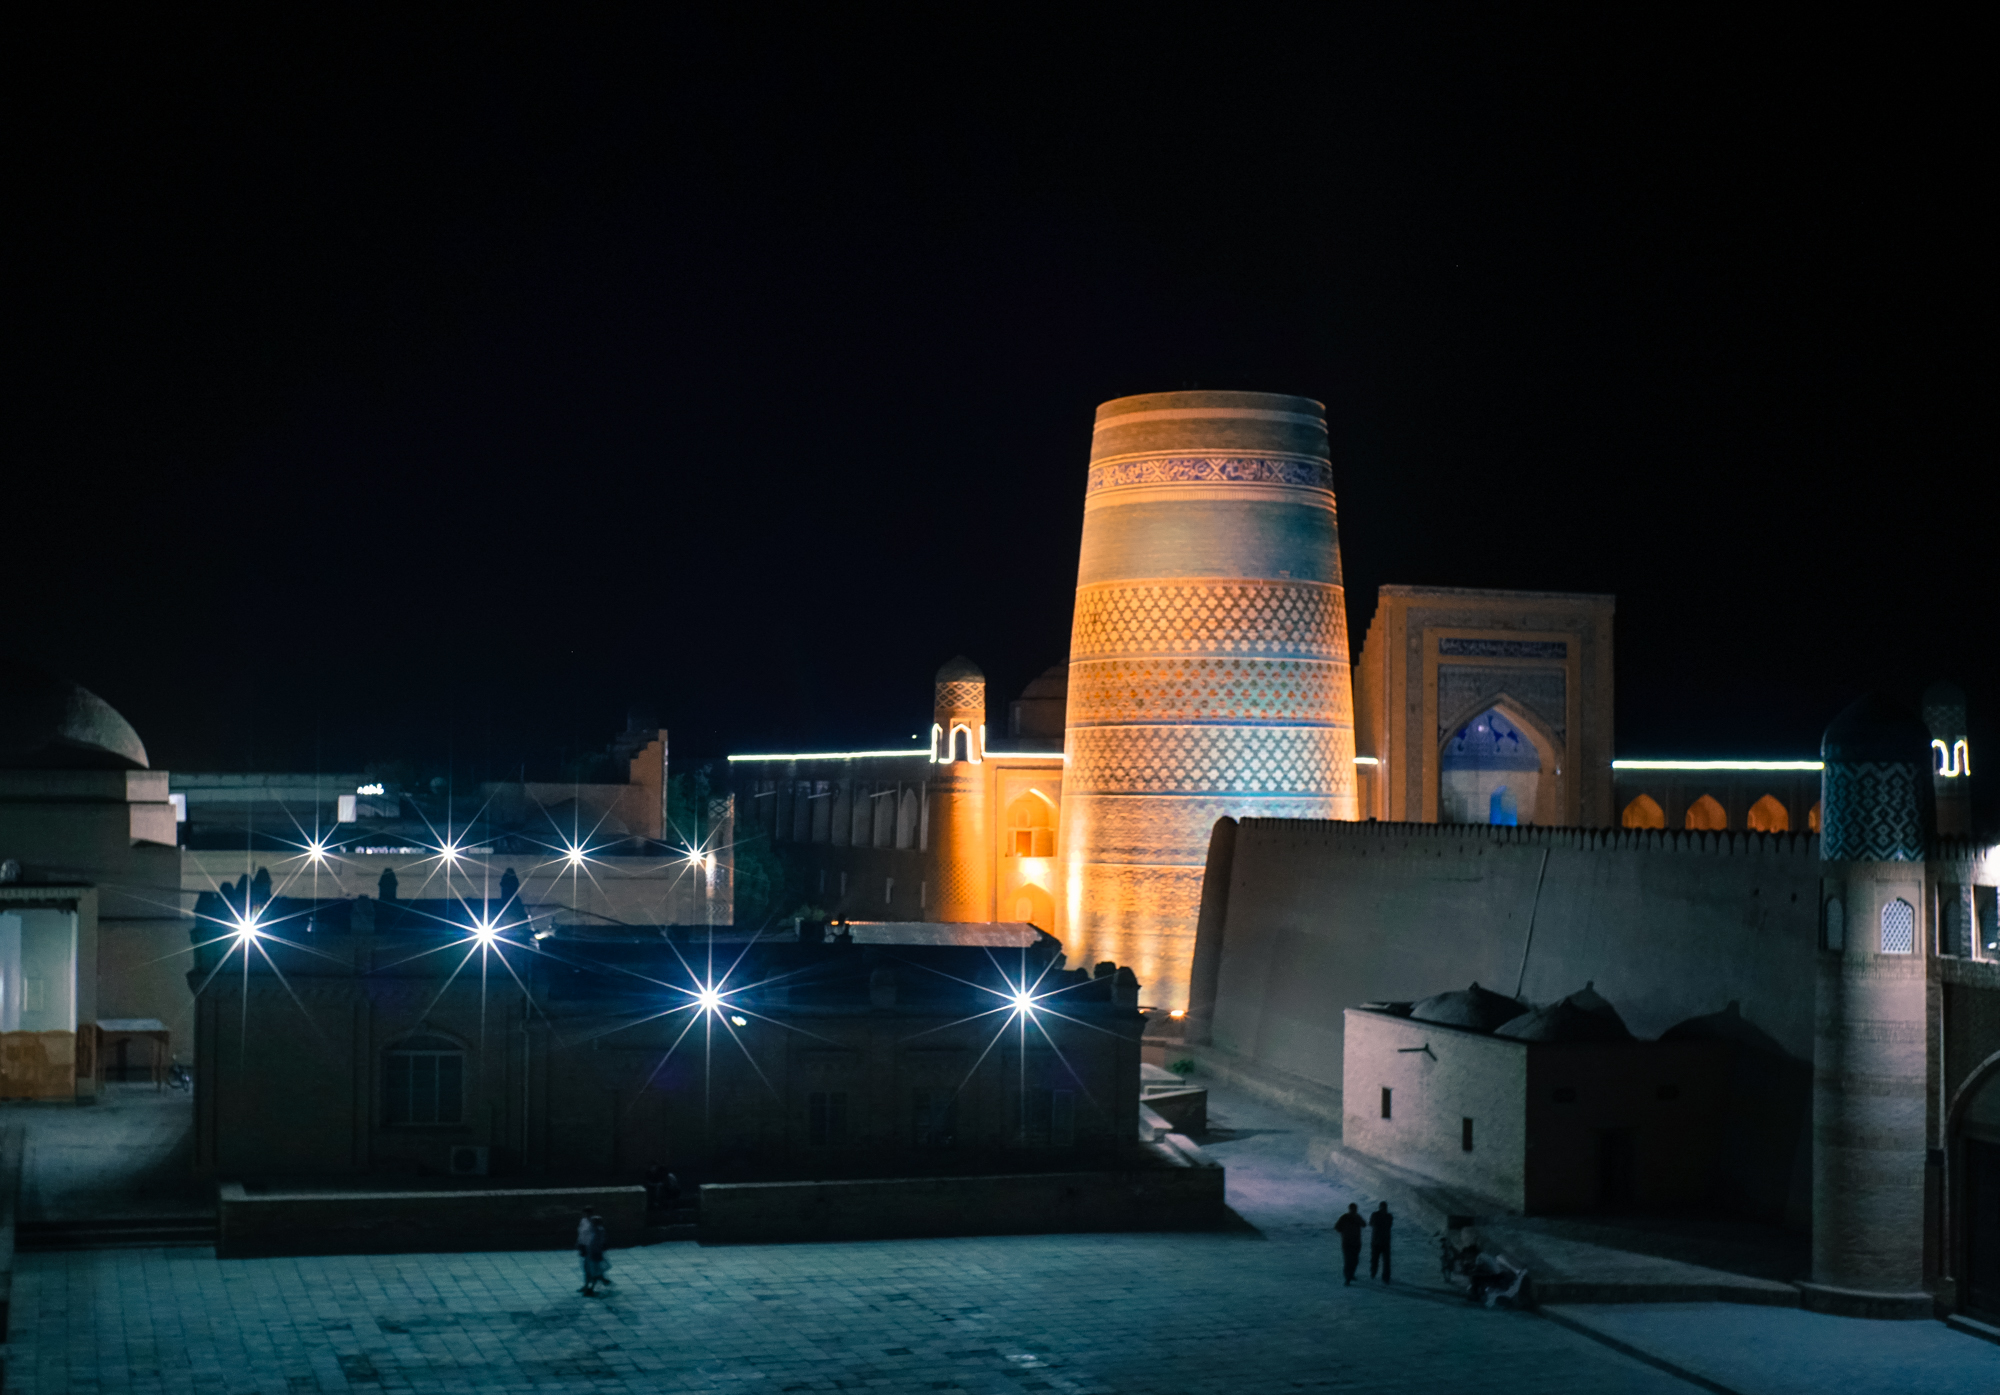 Khiva, Uzbekistan, at night